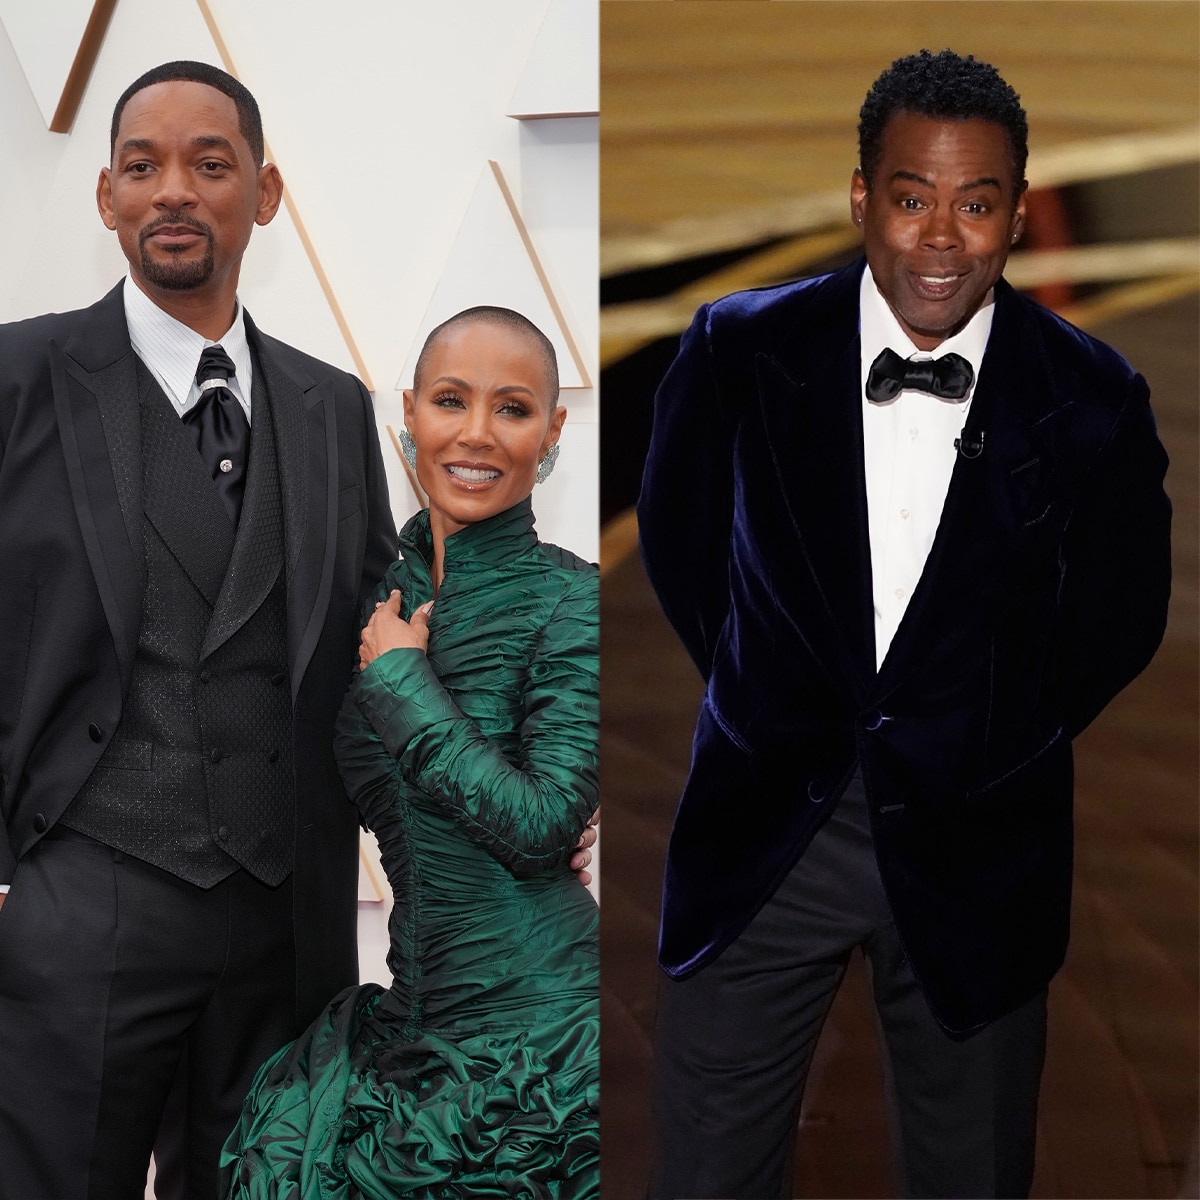 Chris Rock's Prickly Oscar Night History With Will Smith and Jada Pinkett Smith